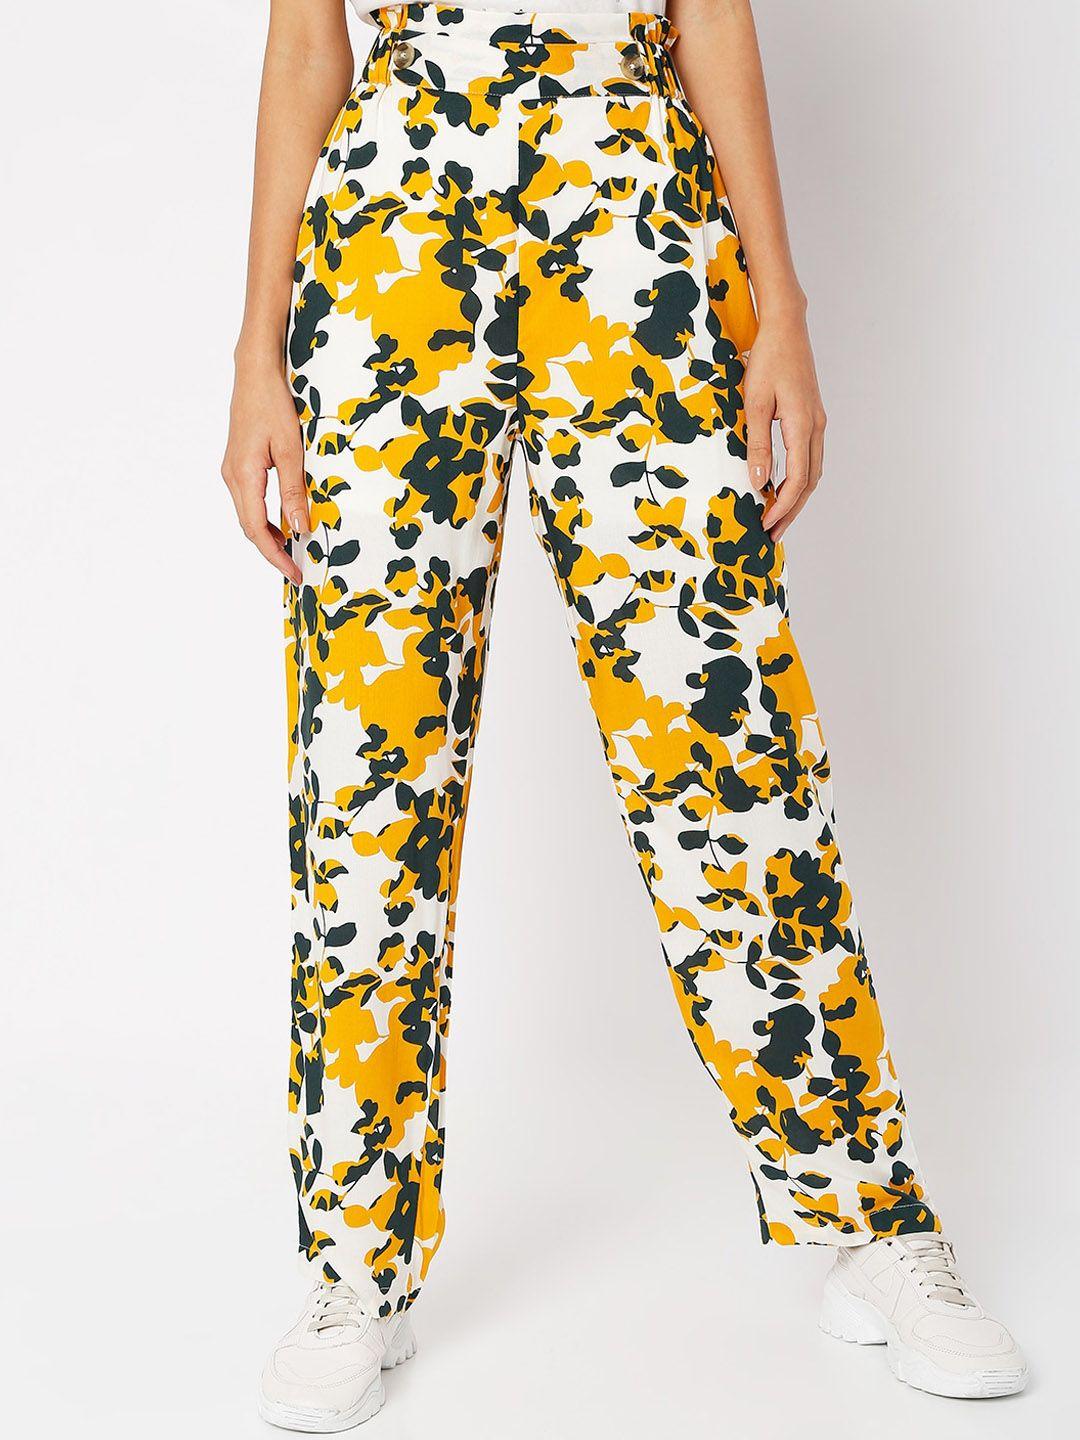 vero-moda-women-yellow-floral-printed-high-rise-trousers